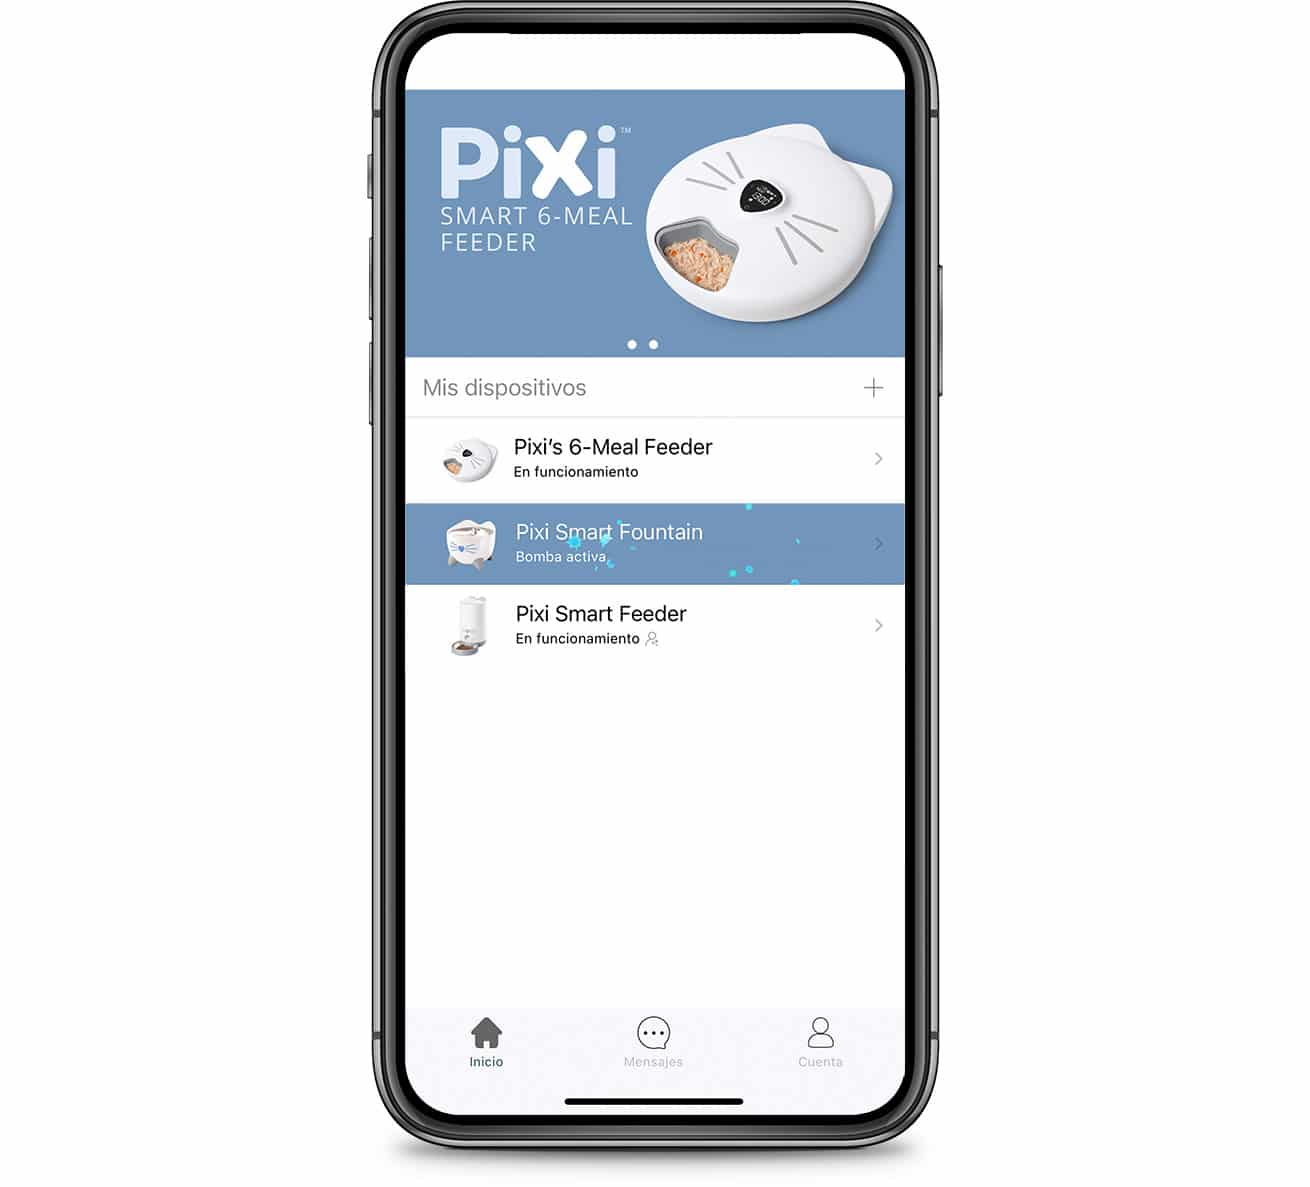 Añadir múltiples productos en la app PIXI